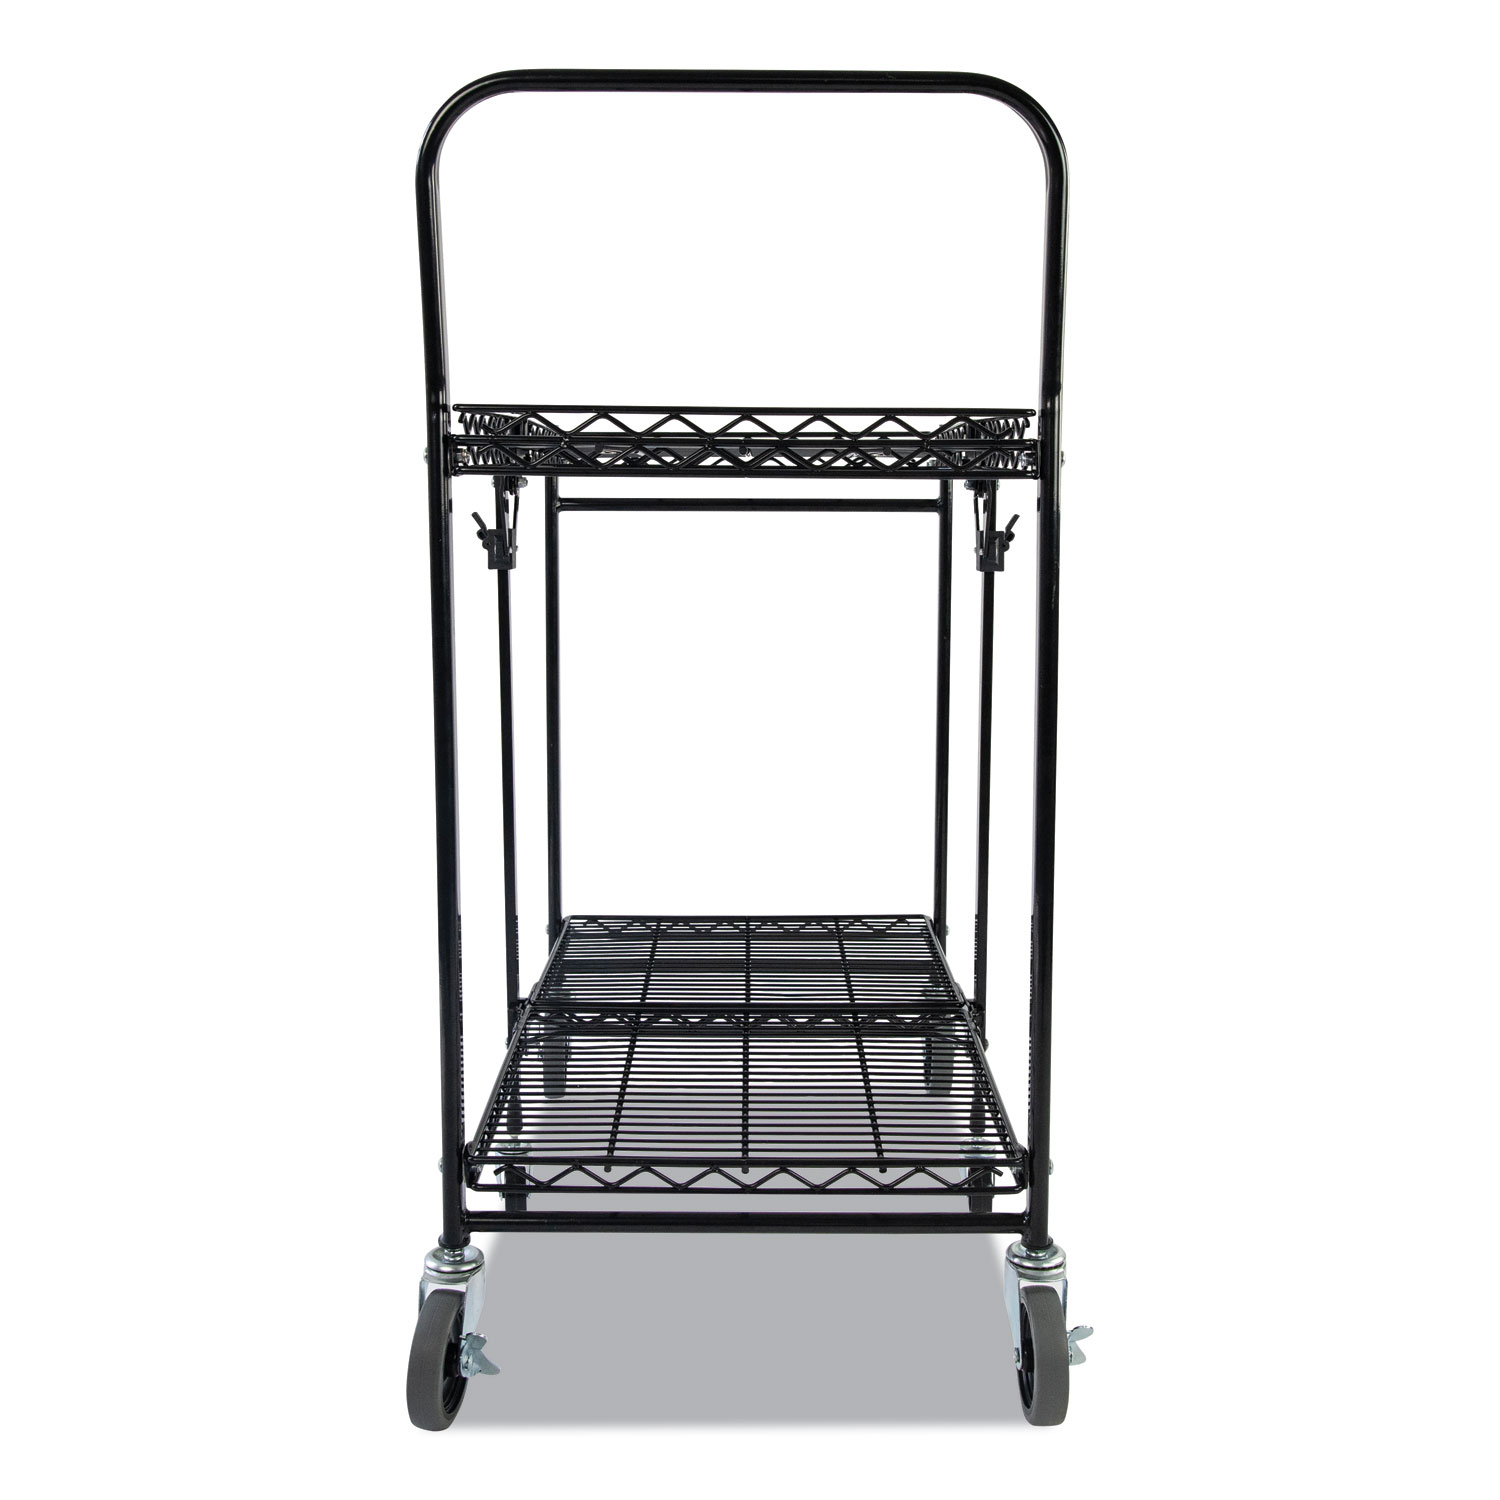 Image of Stowaway Folding Carts, Metal, 2 Shelves, 250 lb Capacity, 29.63" x 37.25" x 18", Black